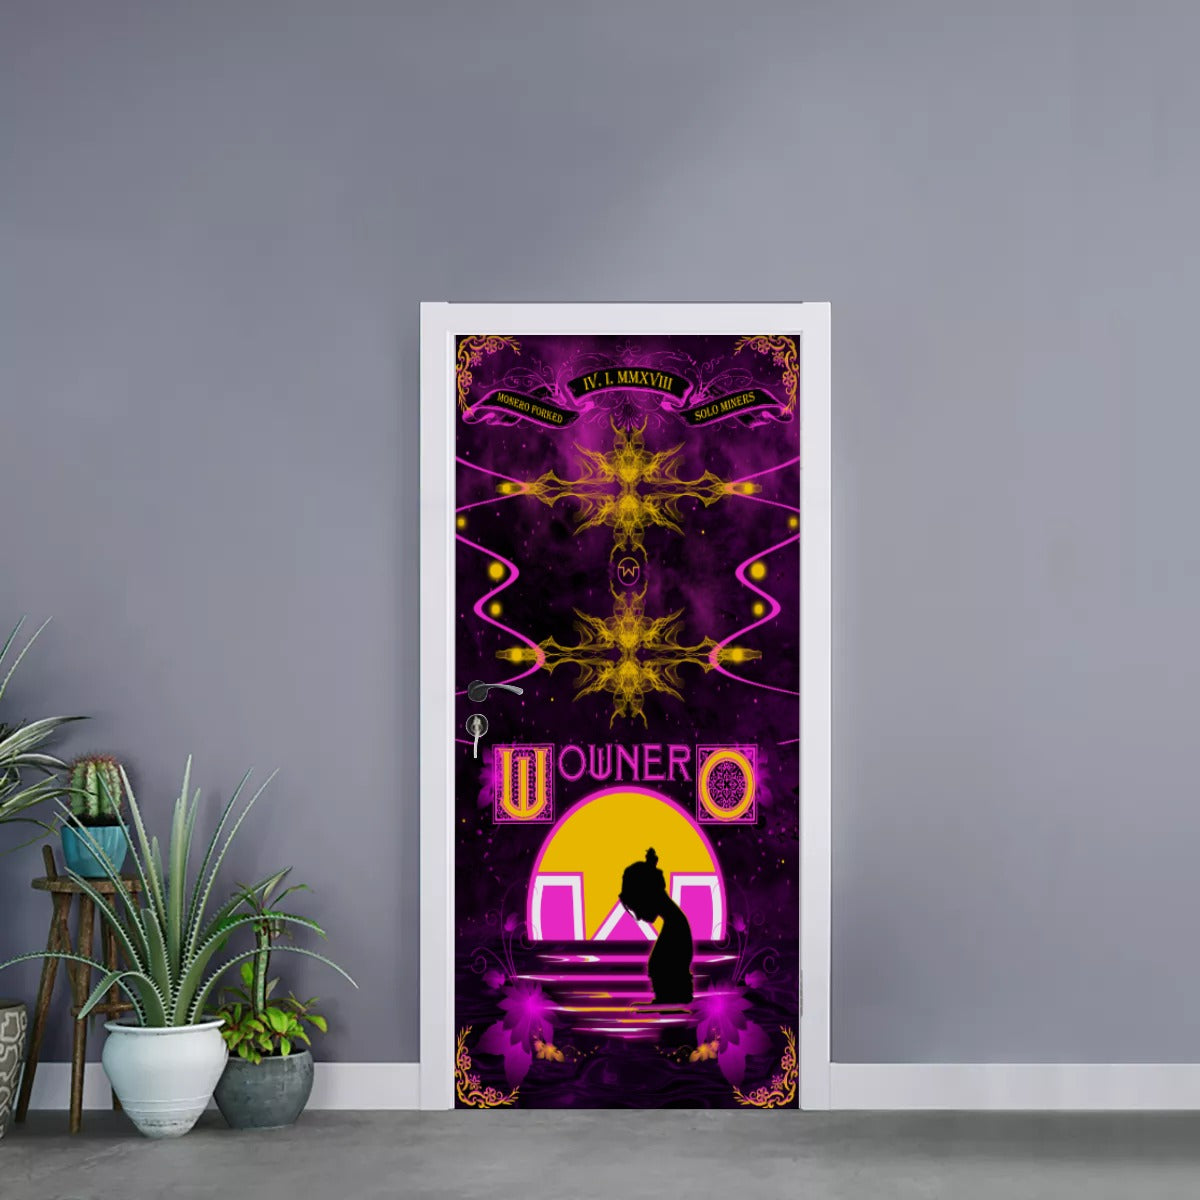 Wownero Reflections Self-adhesive Door Sticker